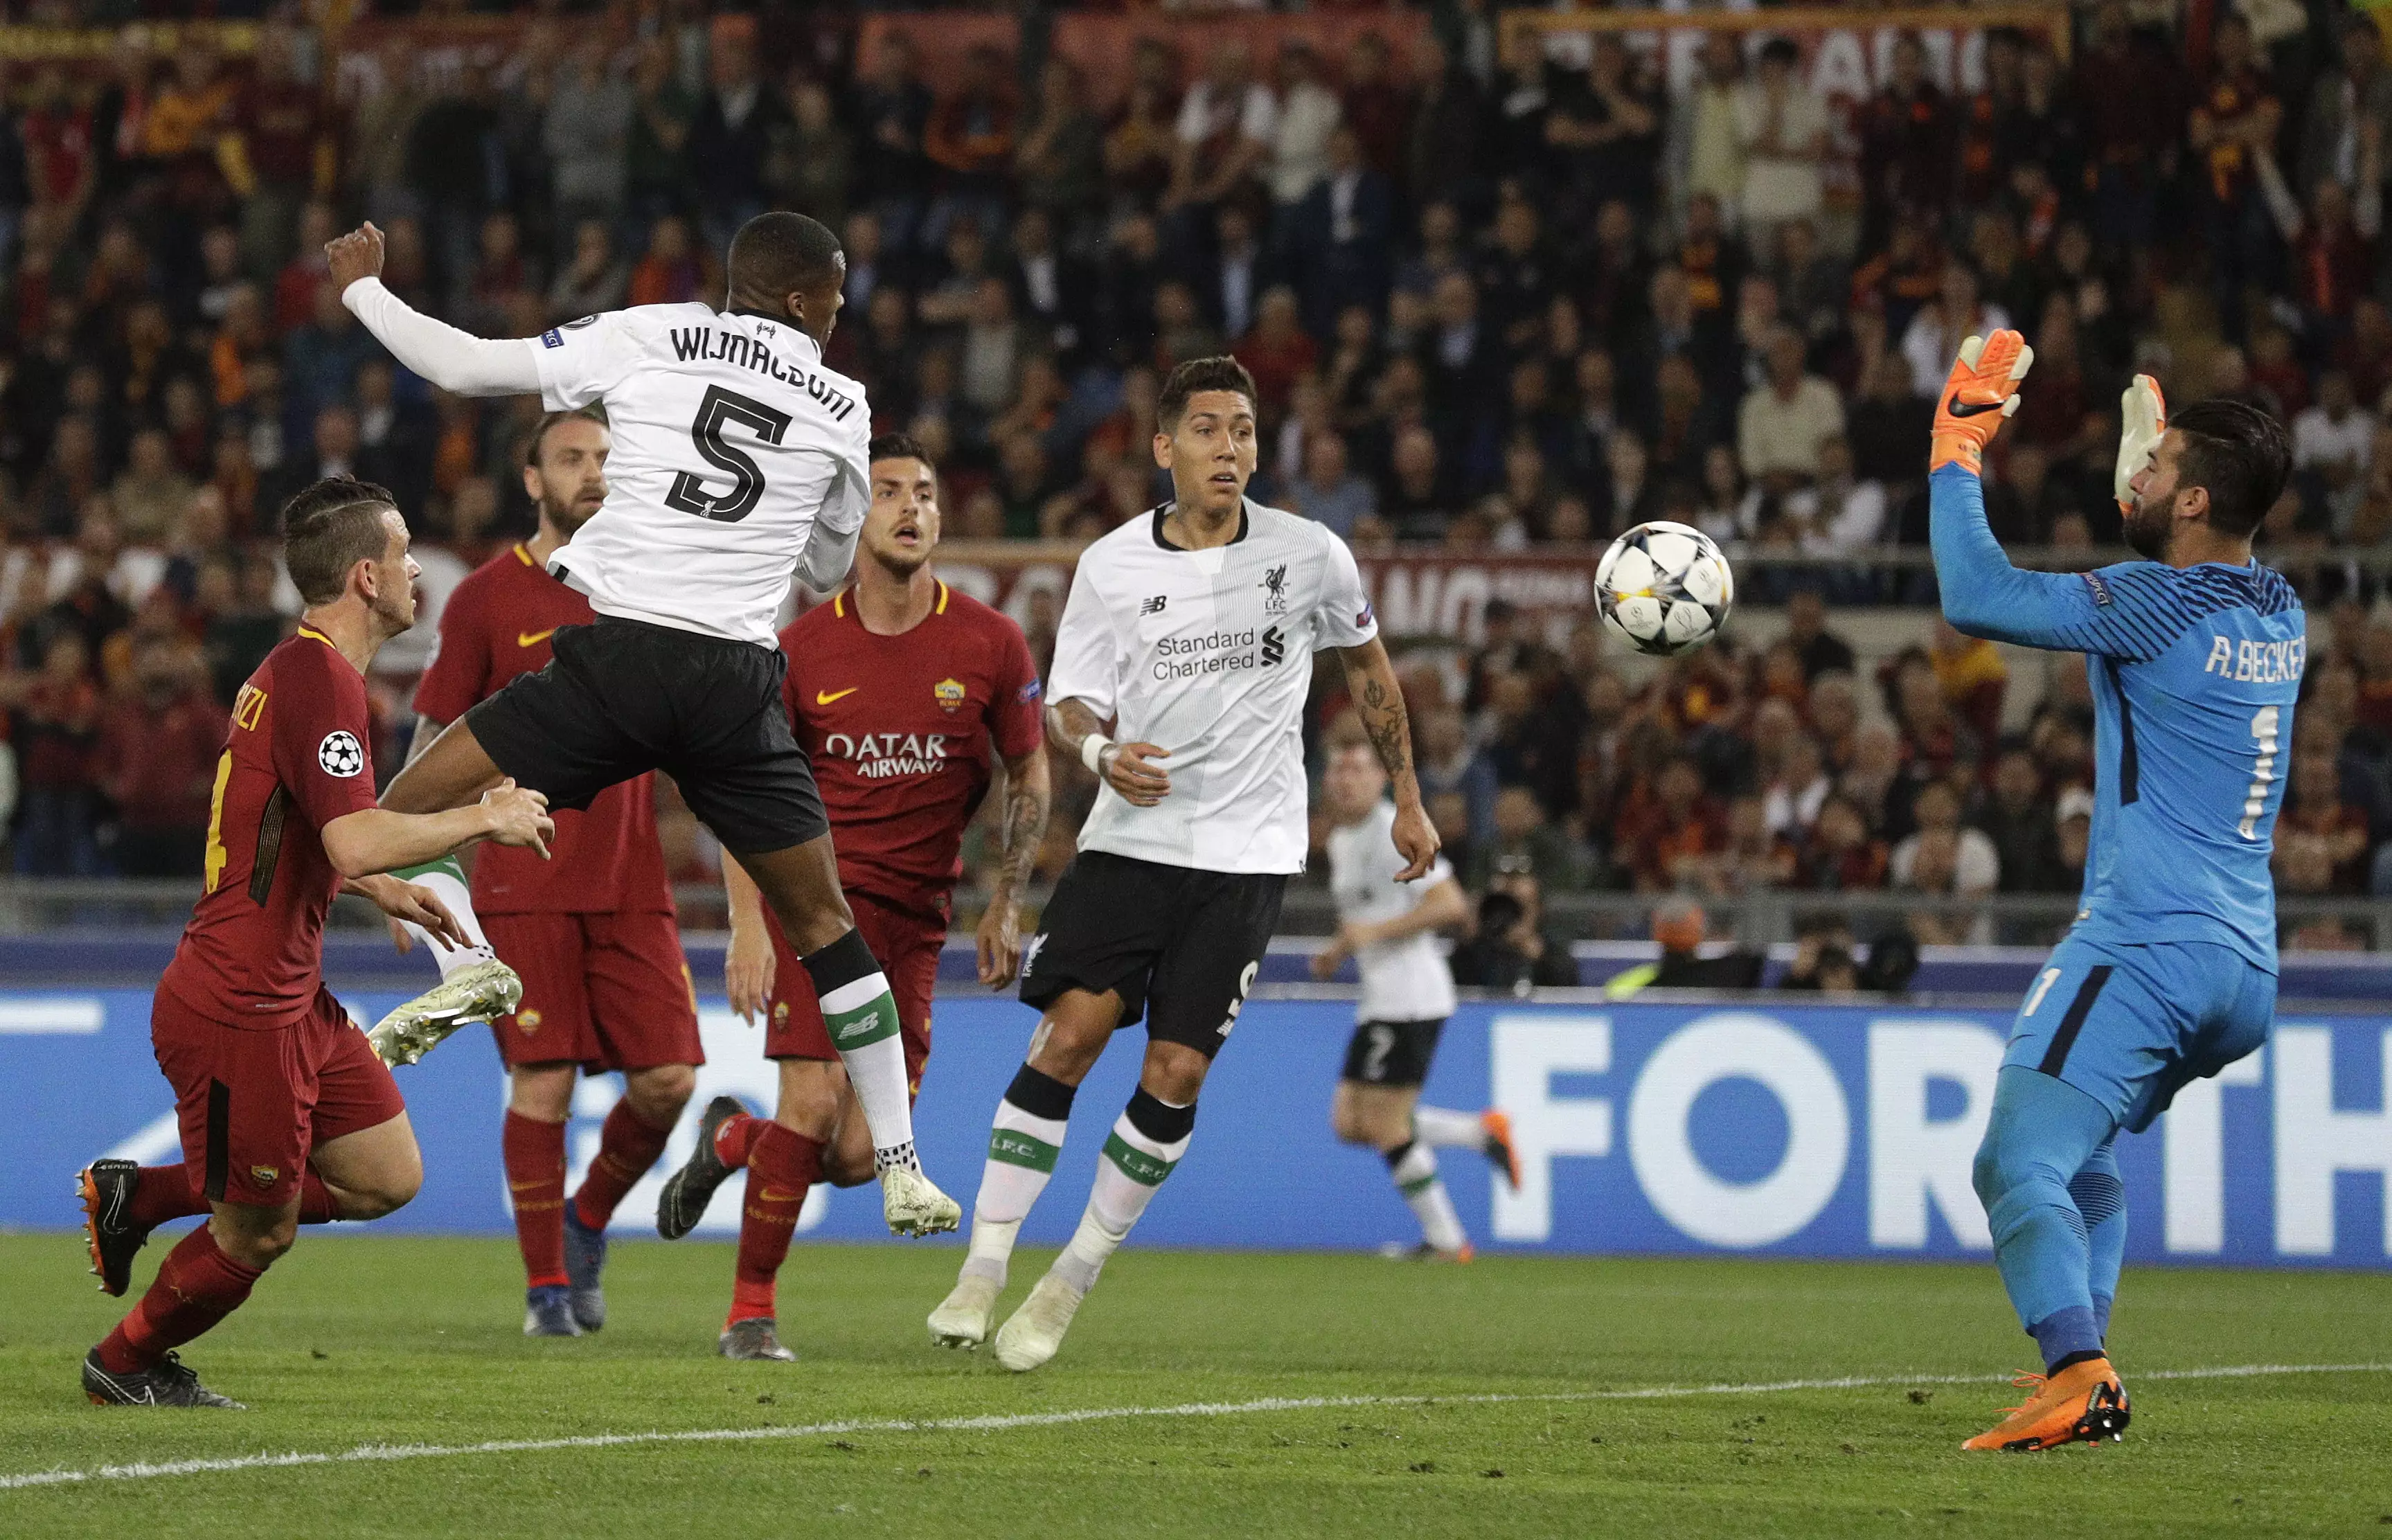 Wijnaldum's goal guaranteed Liverpool's progress. Image: PA Images